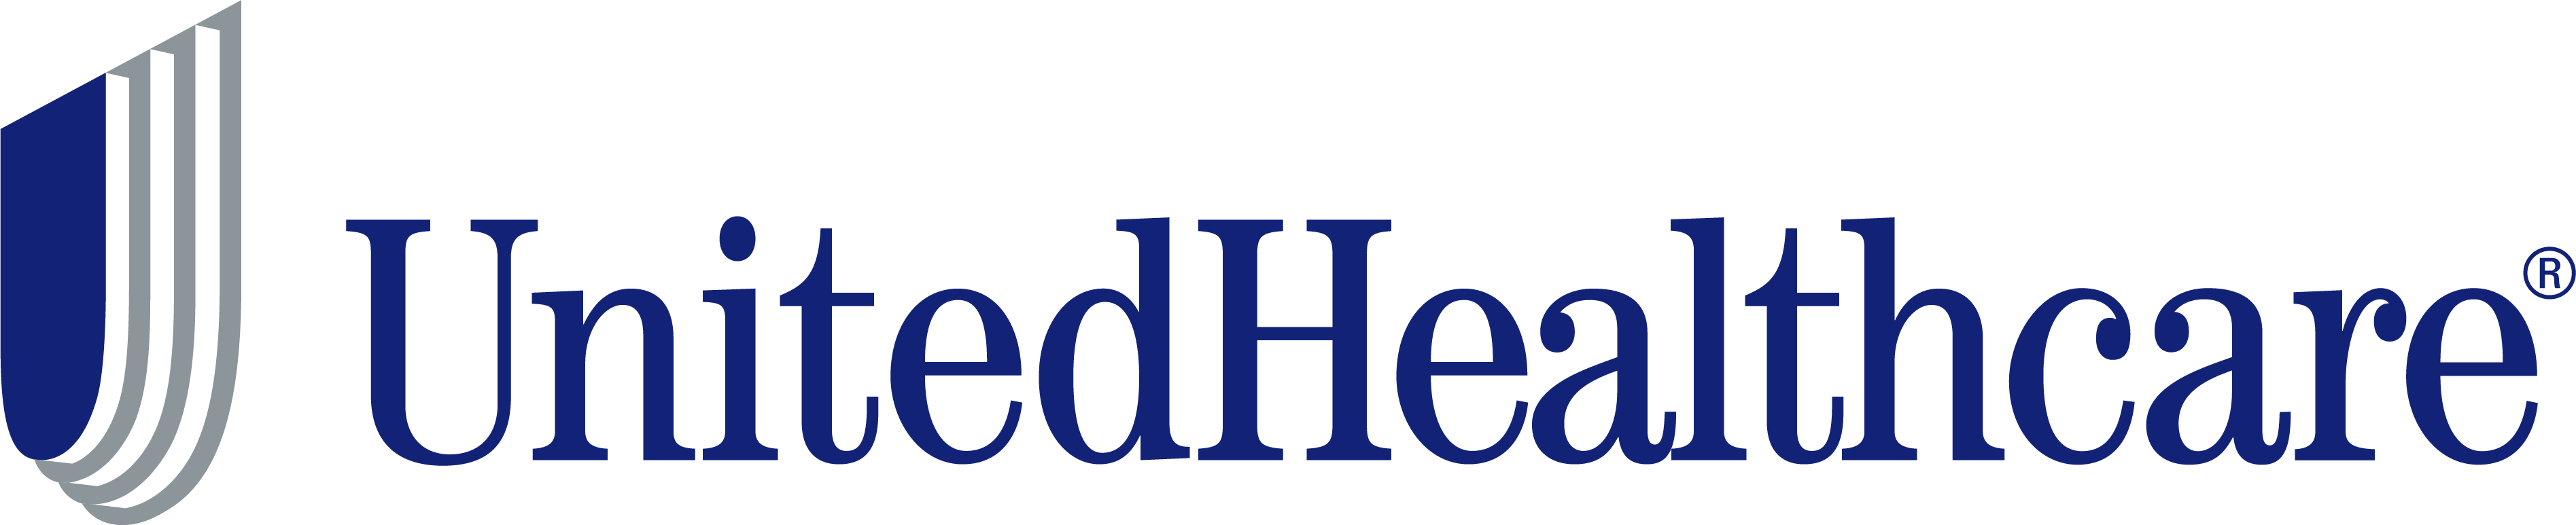 unitedhealthcare Logo